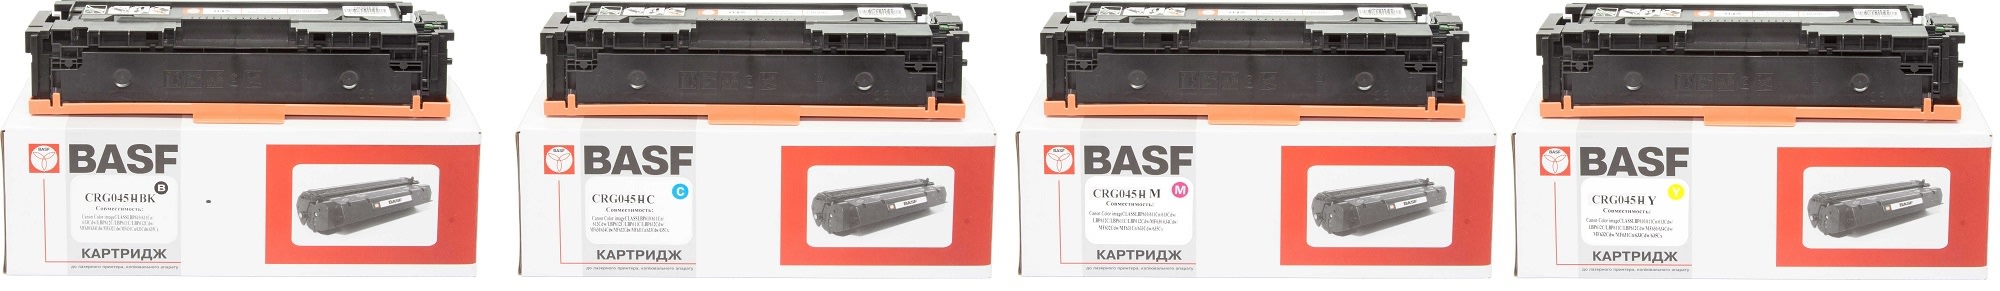 Картриджи BASF-KT-045H для Canon i-Sensys MF-631cn Купить картриджи.